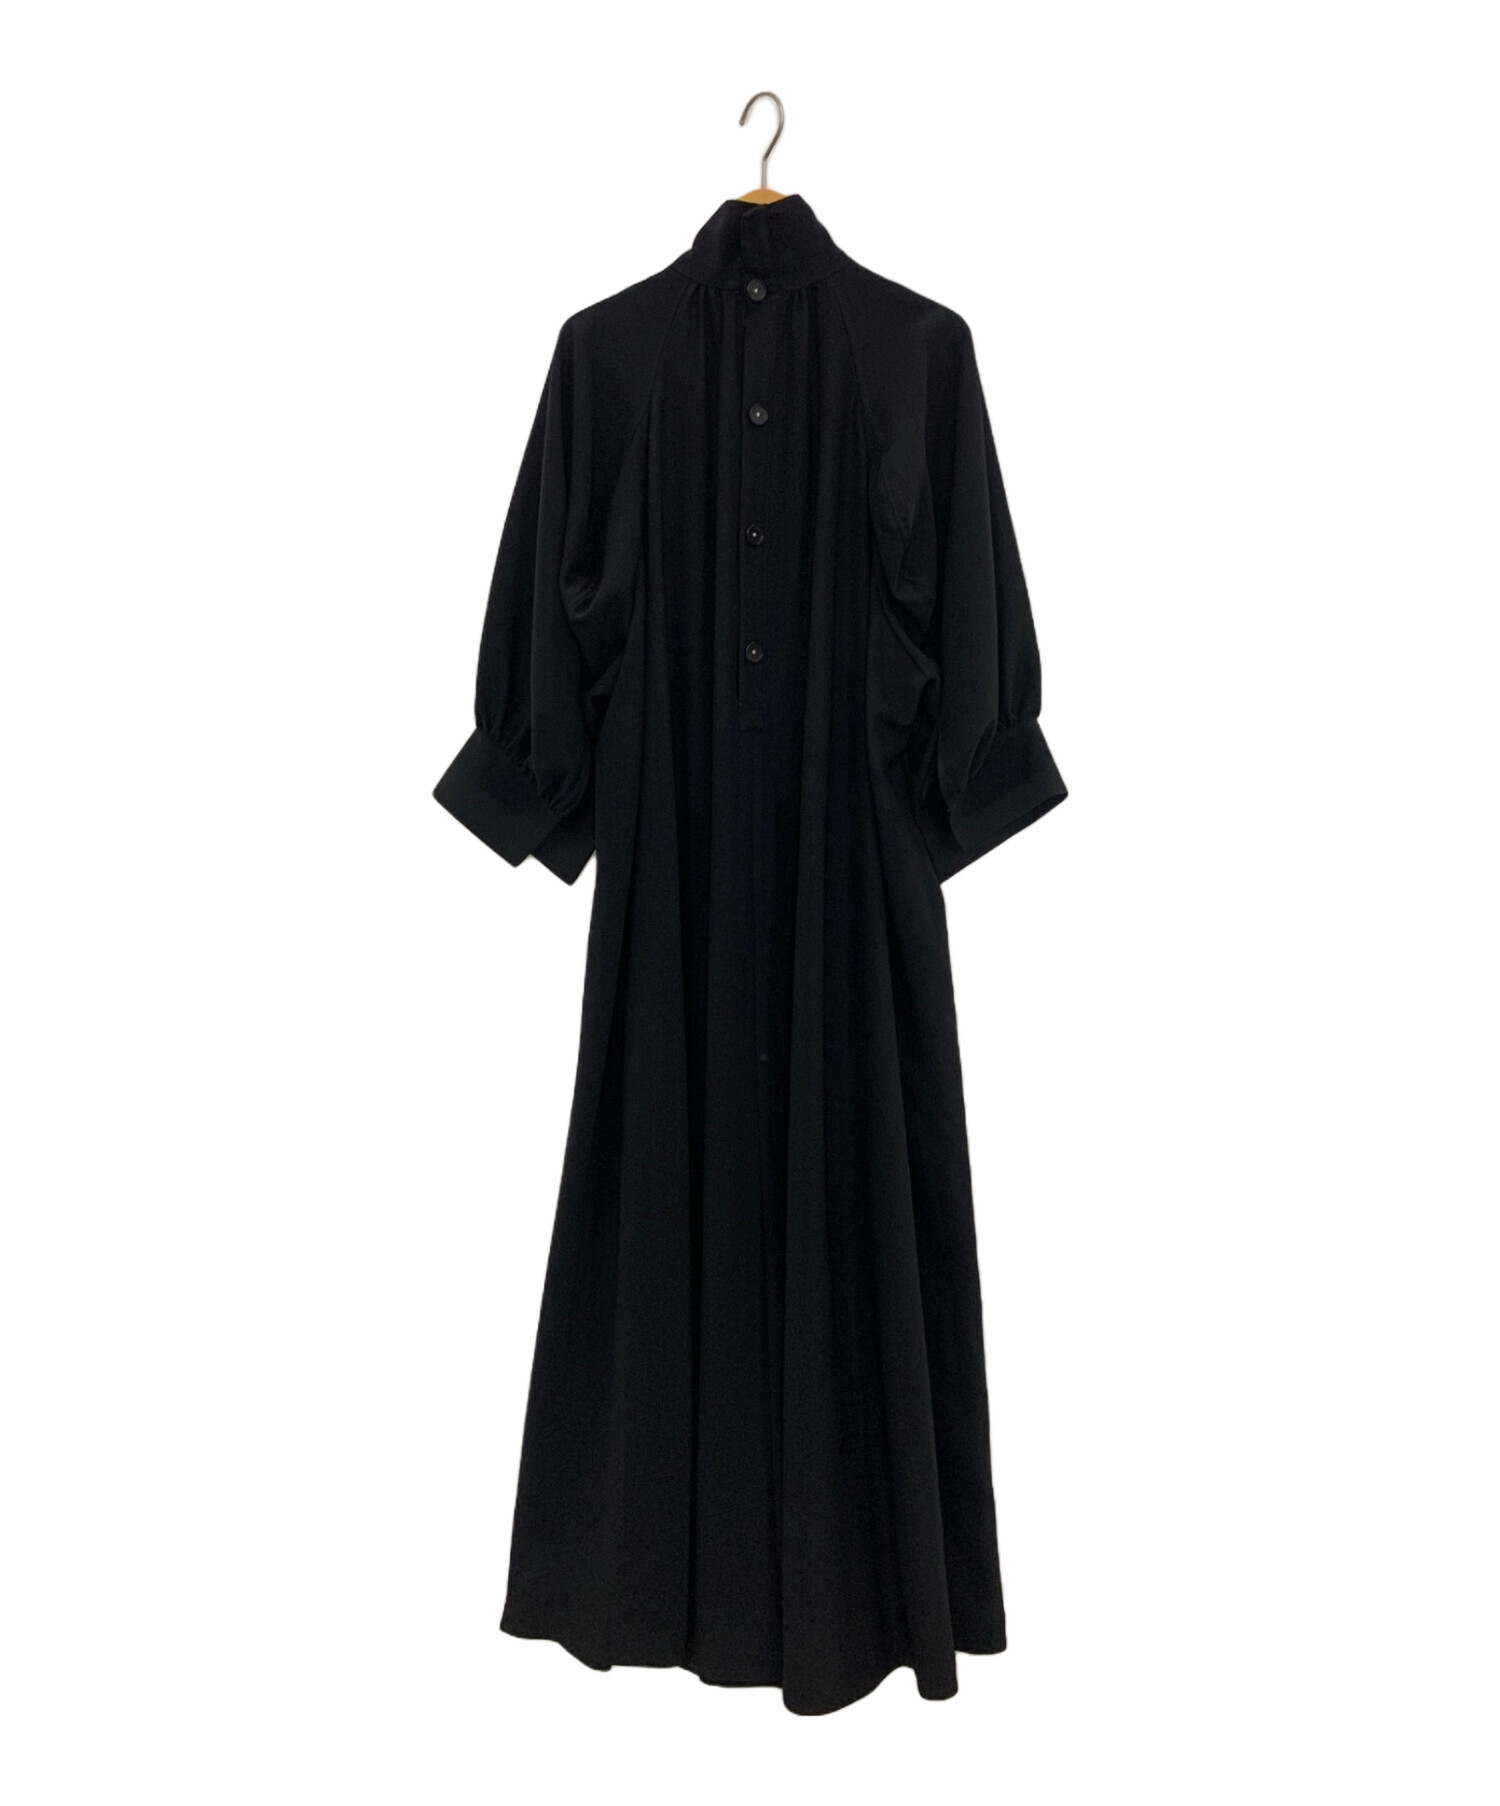 42120JPYお値下げ【美品】エンフォルド DRESS ブラック 38サイズ